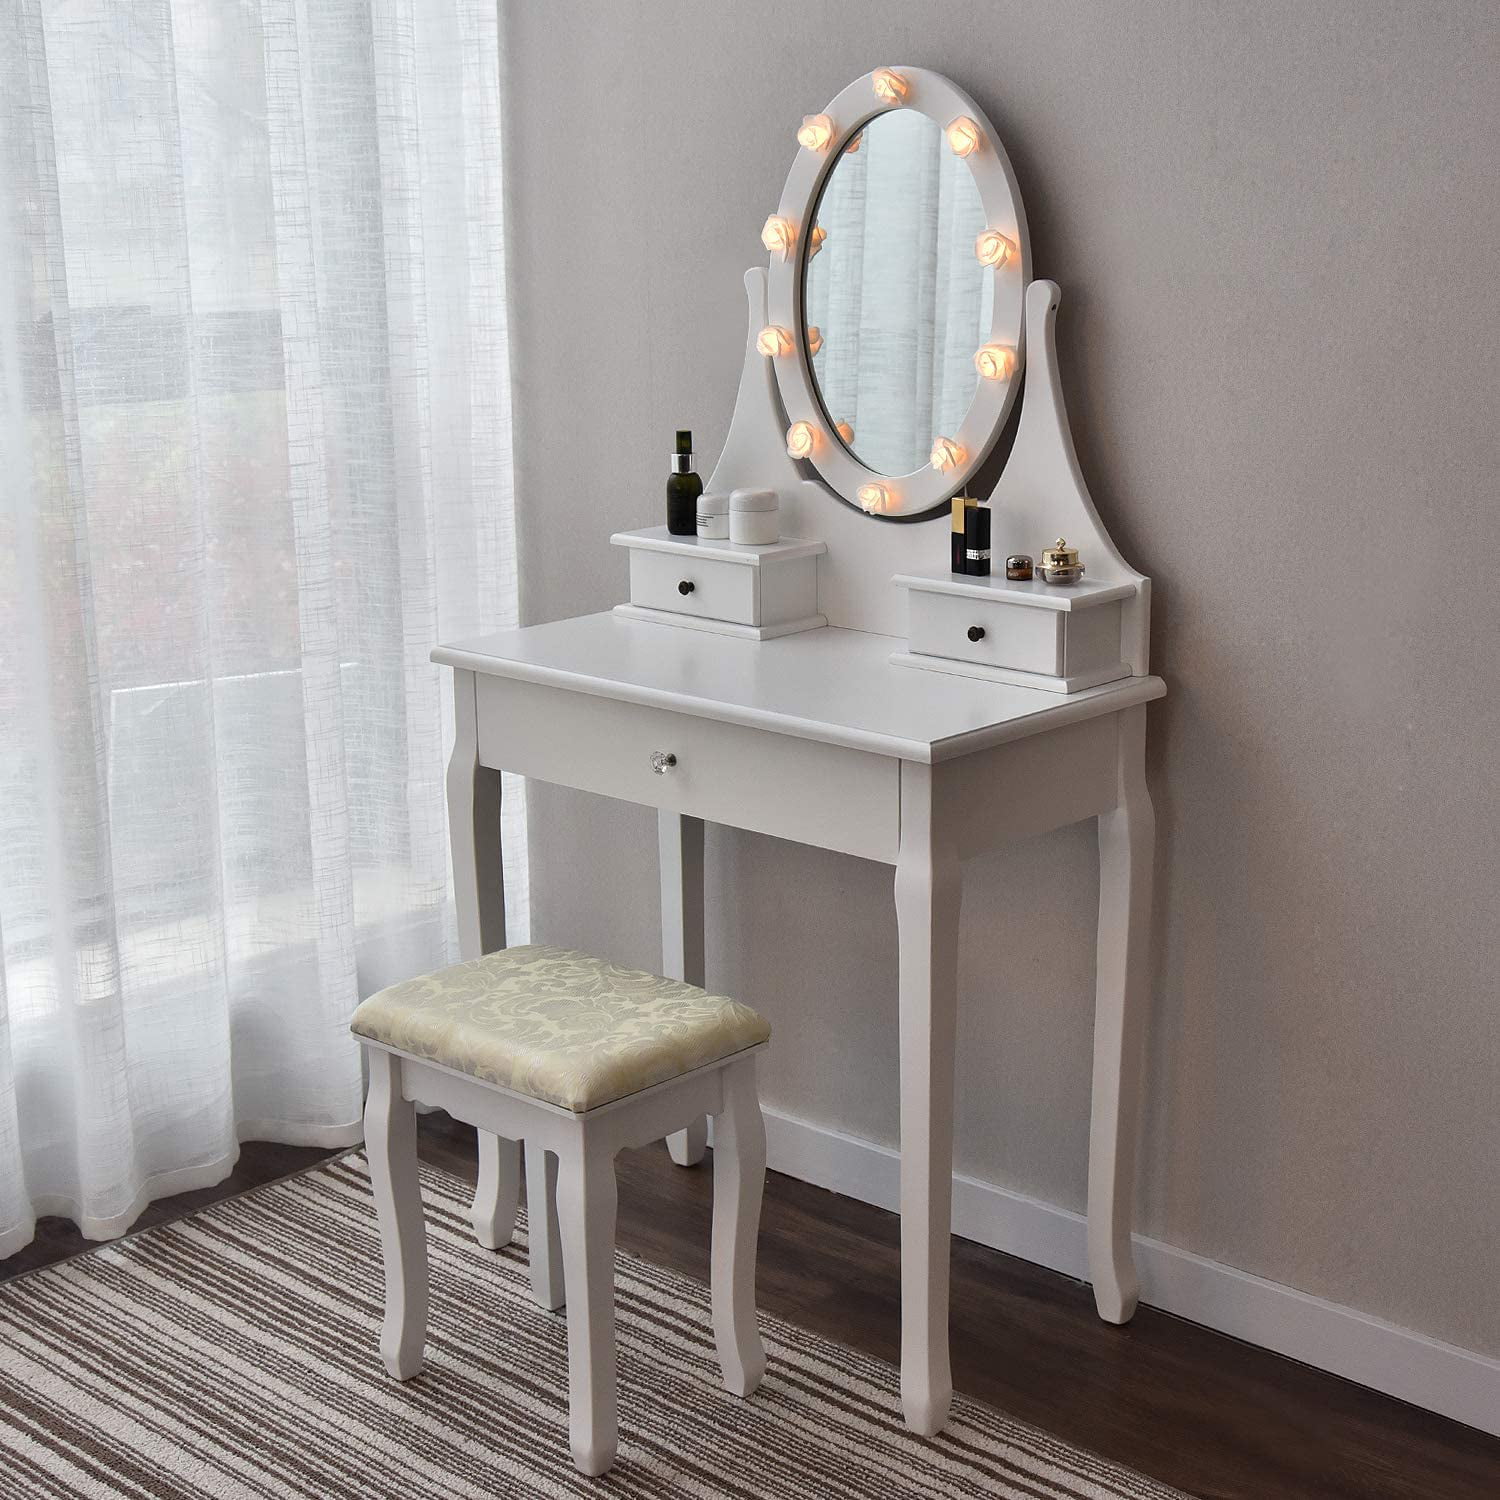 Elecwish Makeup Vanity Table Set Mirror, Makeup Lighting For Vanity Table